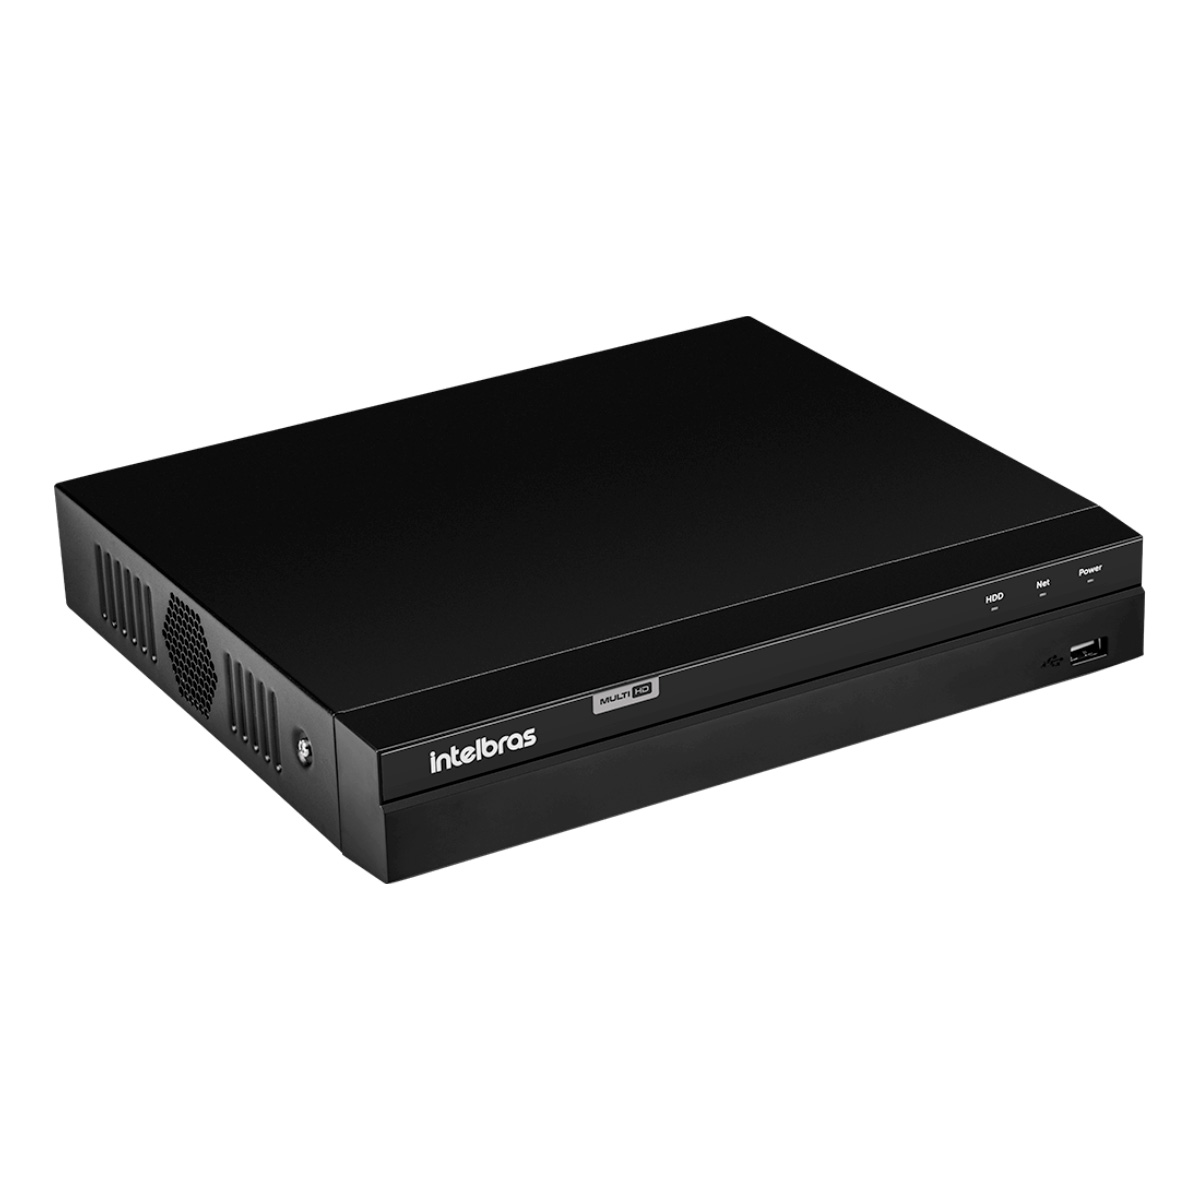 DVR 16 Canais Intelbras MHDX 1216 AM - Gravador Digital - Multi HD - IP, HDCVI, HDTVI, AHD e Analógica - Compatibilidade ONVIF